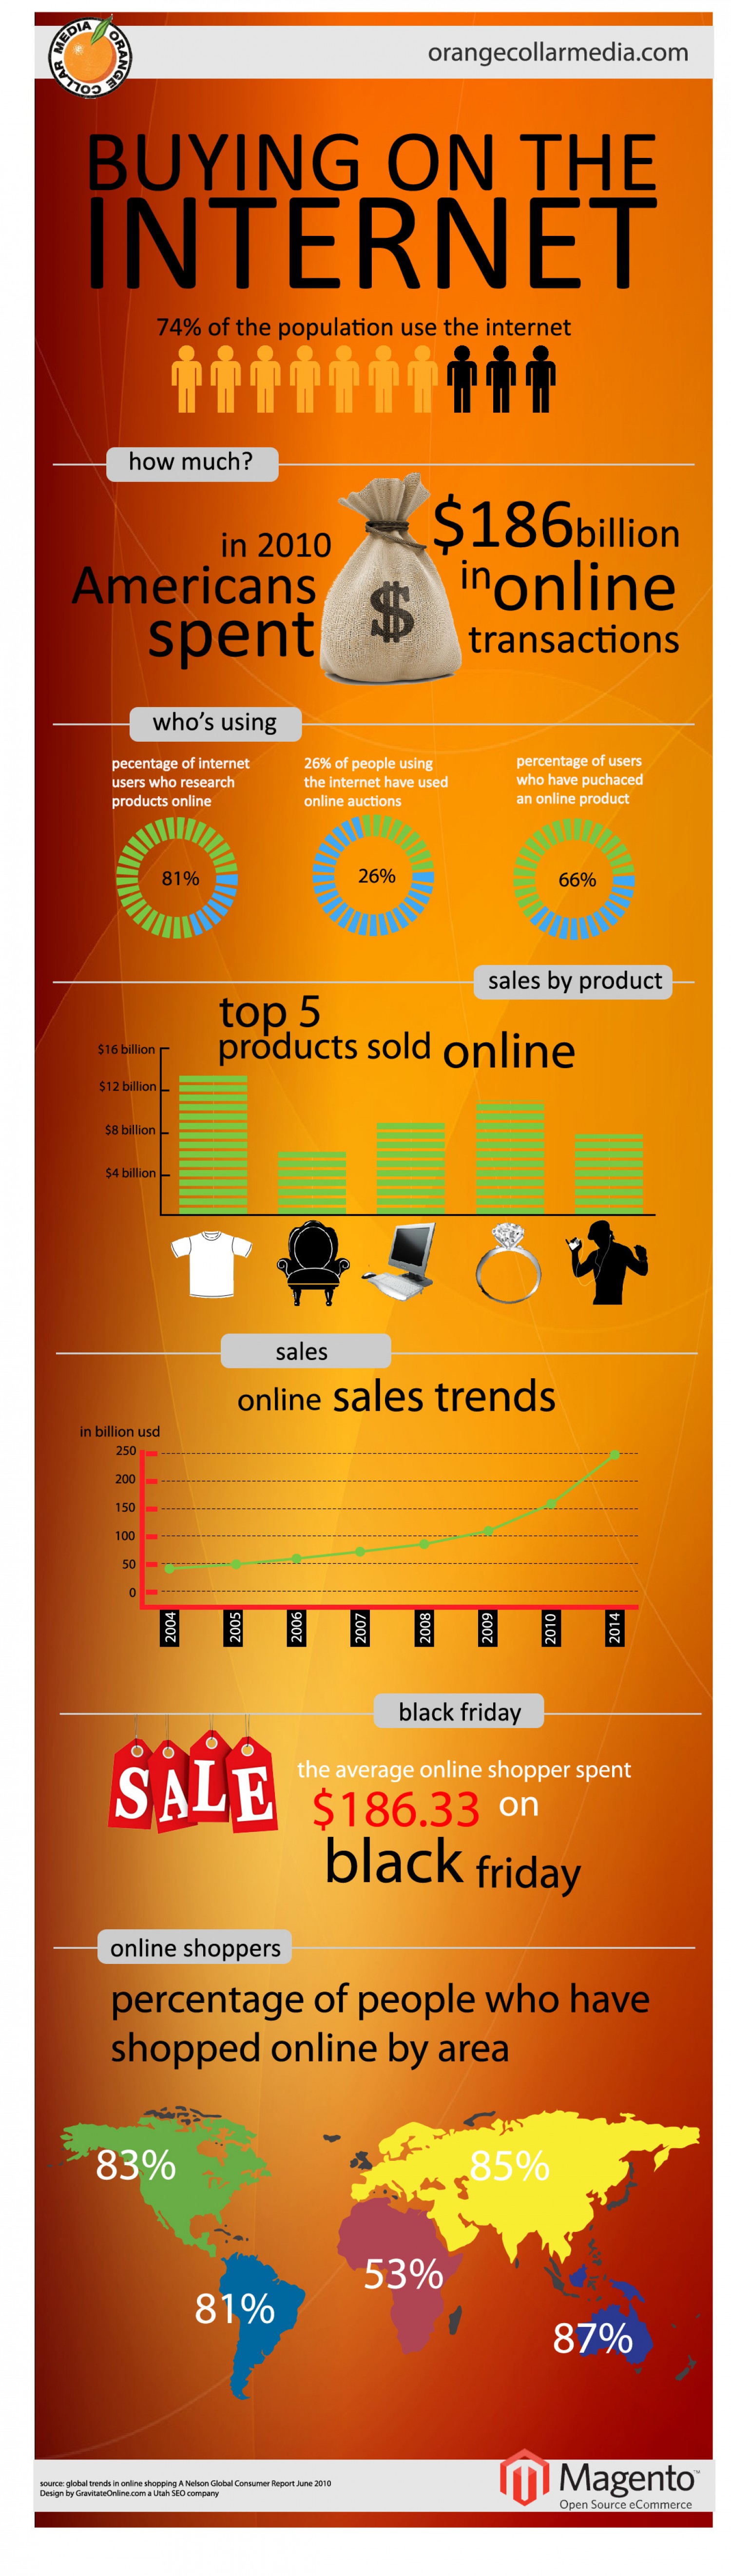 6.-Online-shopping-statistics.jpg